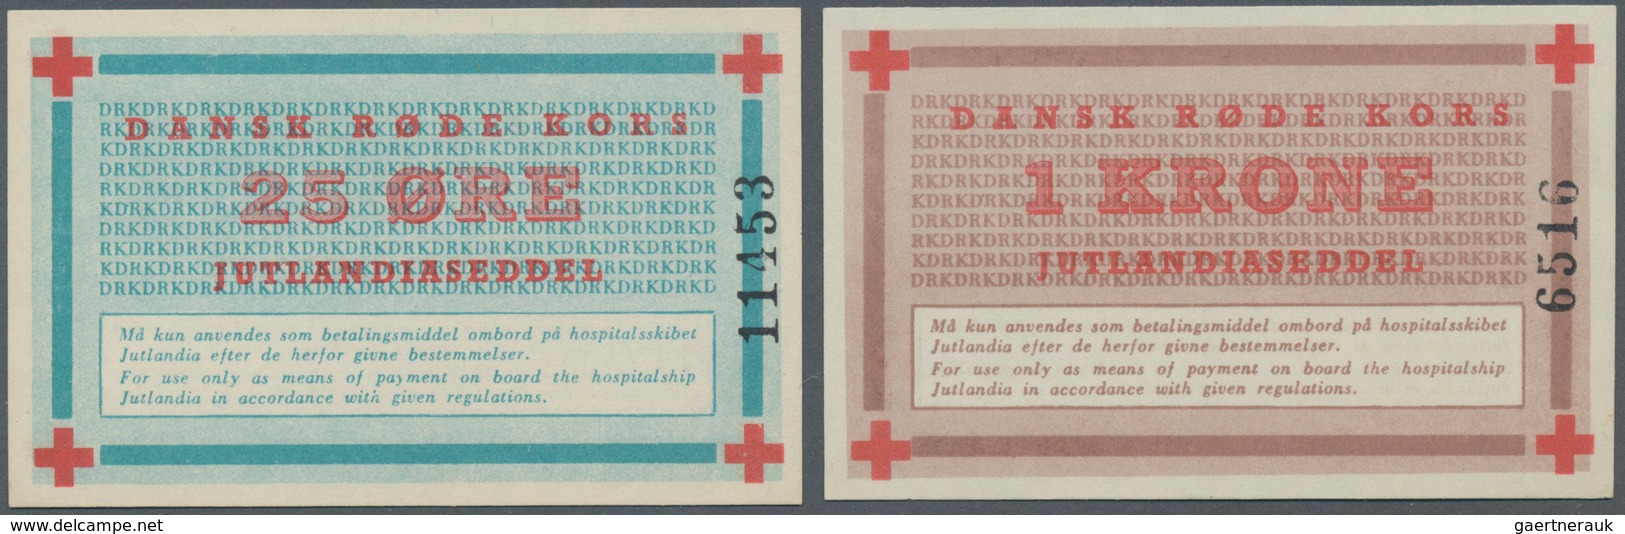 Denmark  / Dänemark: Jutland Notgeld Set With 3 Pcs. 25 Oere, 1 And 5 Kroner ND, P.NL In UNC Conditi - Dänemark